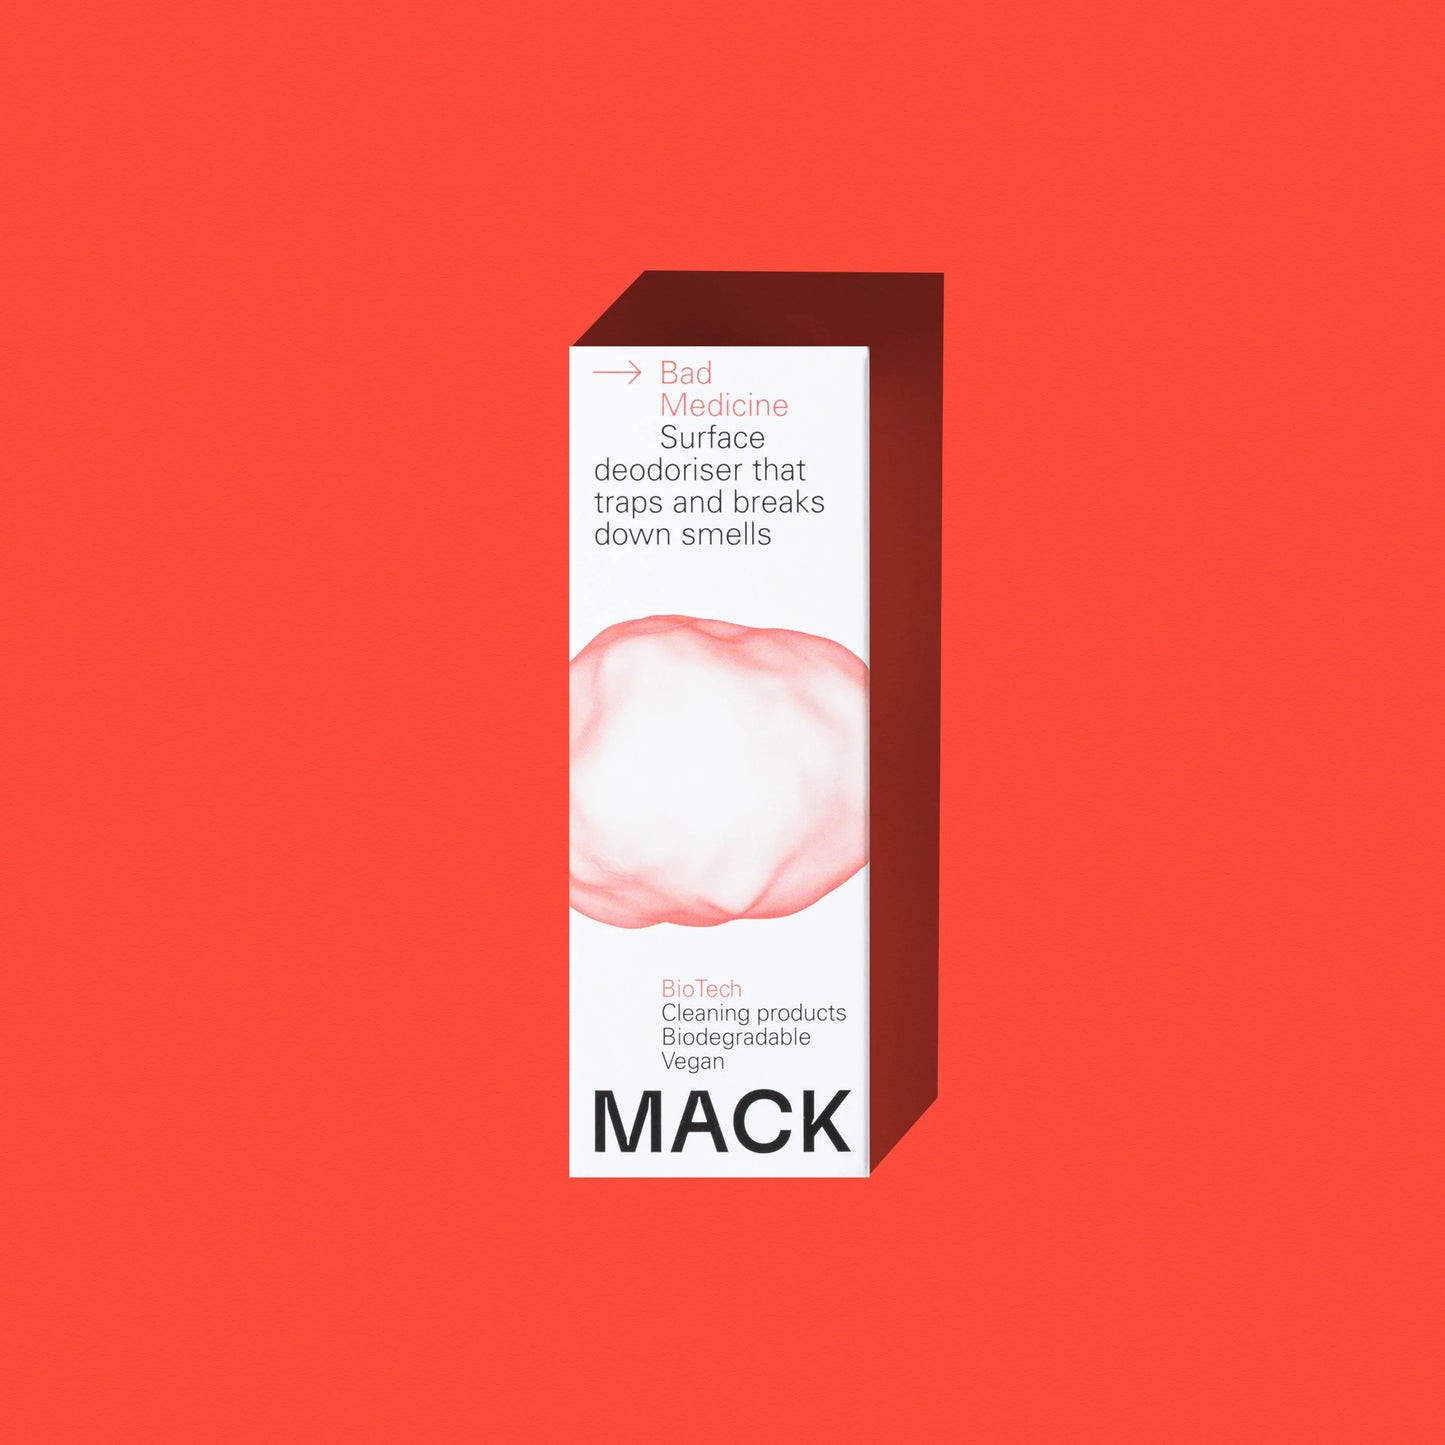 MACK Bad Medicine BioPod - surface deodoriser